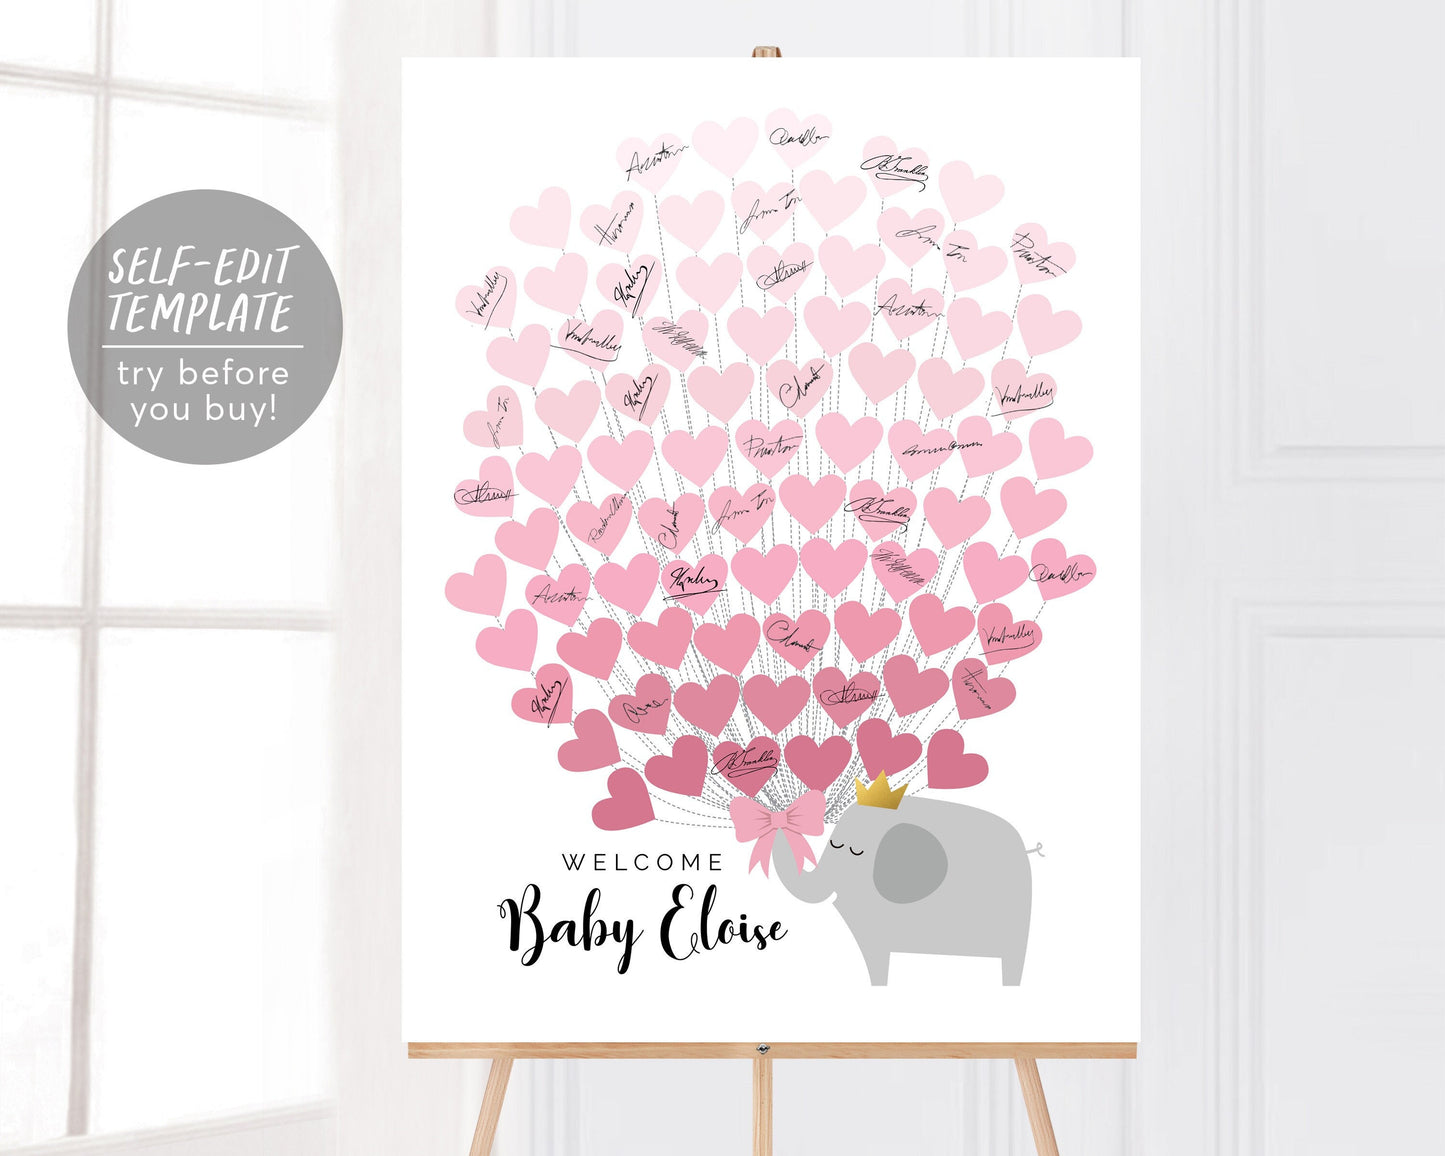 Baby Girl Elephant Heart Balloons Baby Shower Guest Book Alternative Editable Template, Blush Safari Animal Crown Theme Guestbook Sign